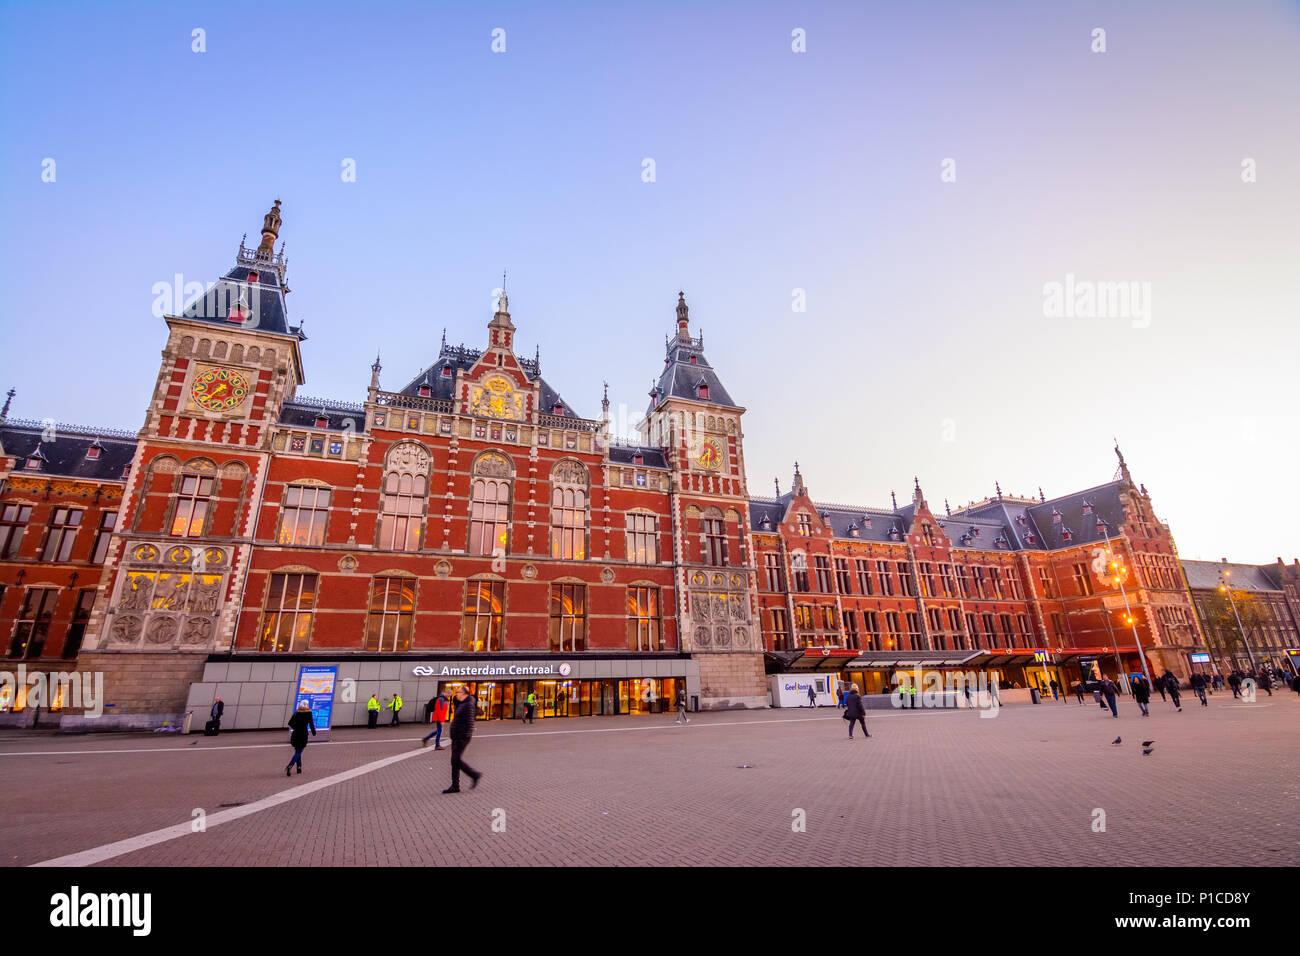 Amsterdam Centraal, largest railway station, major national railway hub ...